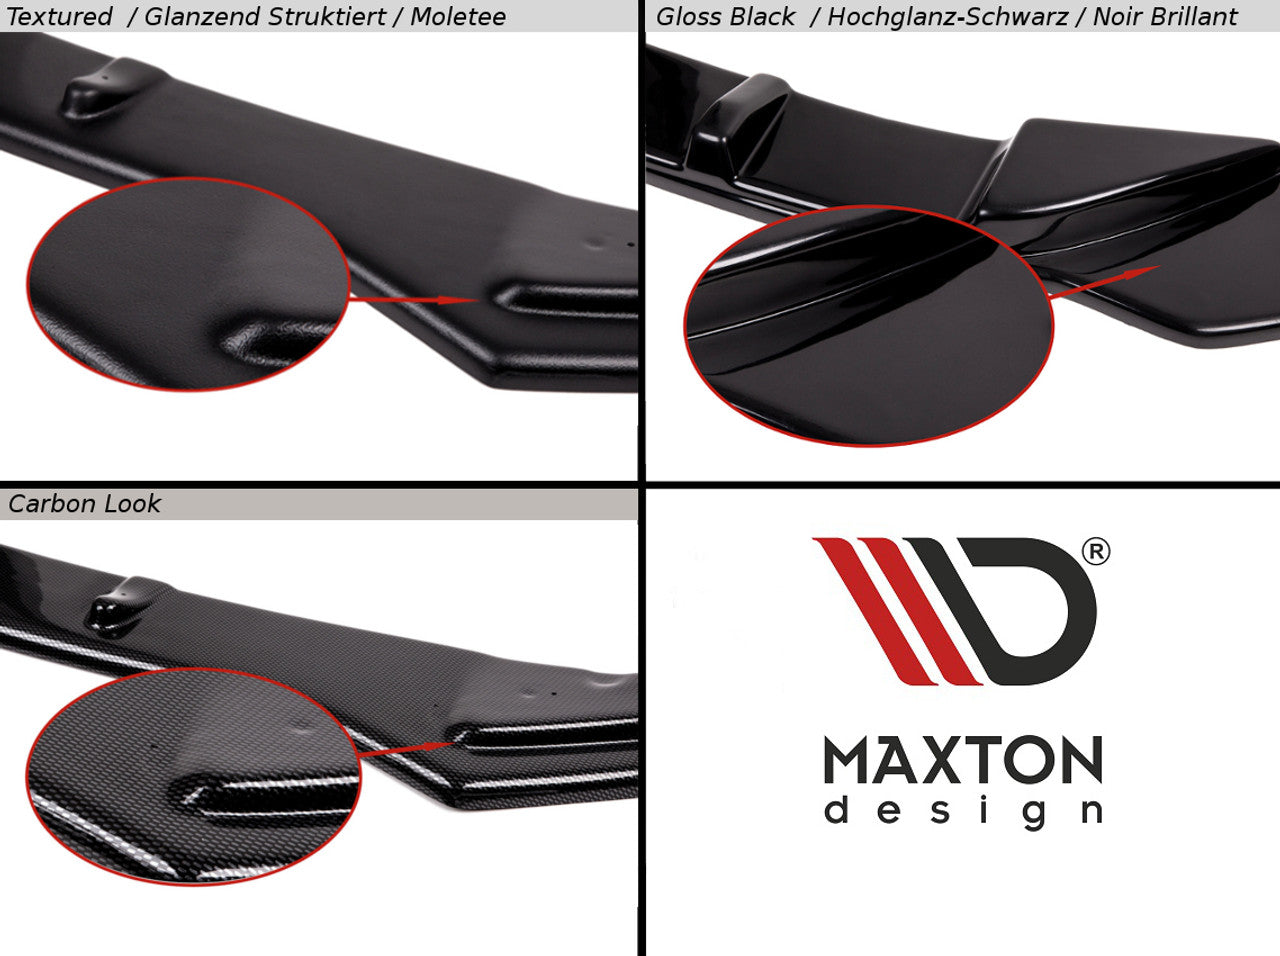 Maxton Design ignite performance